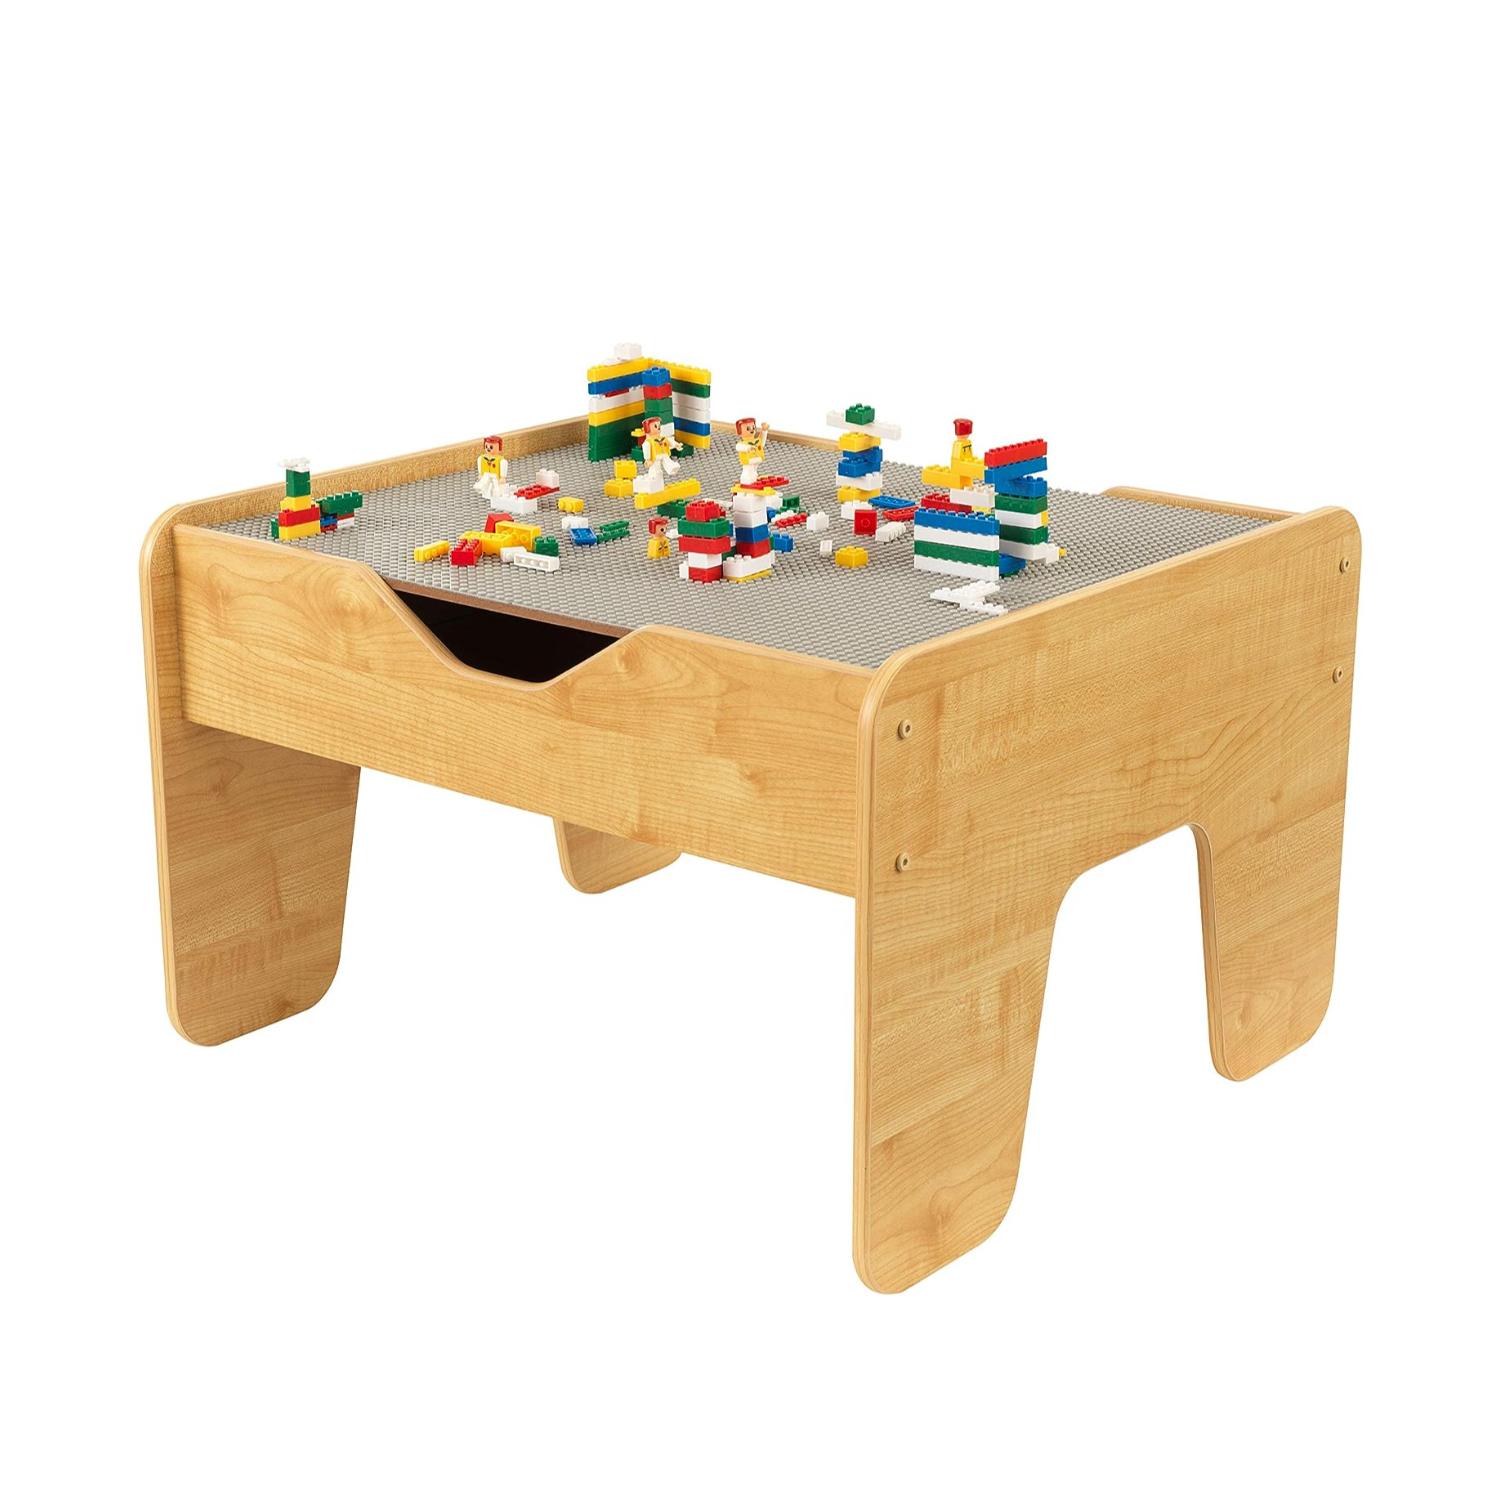 Montessori KidKraft 2-in-1 Activity Table With Board